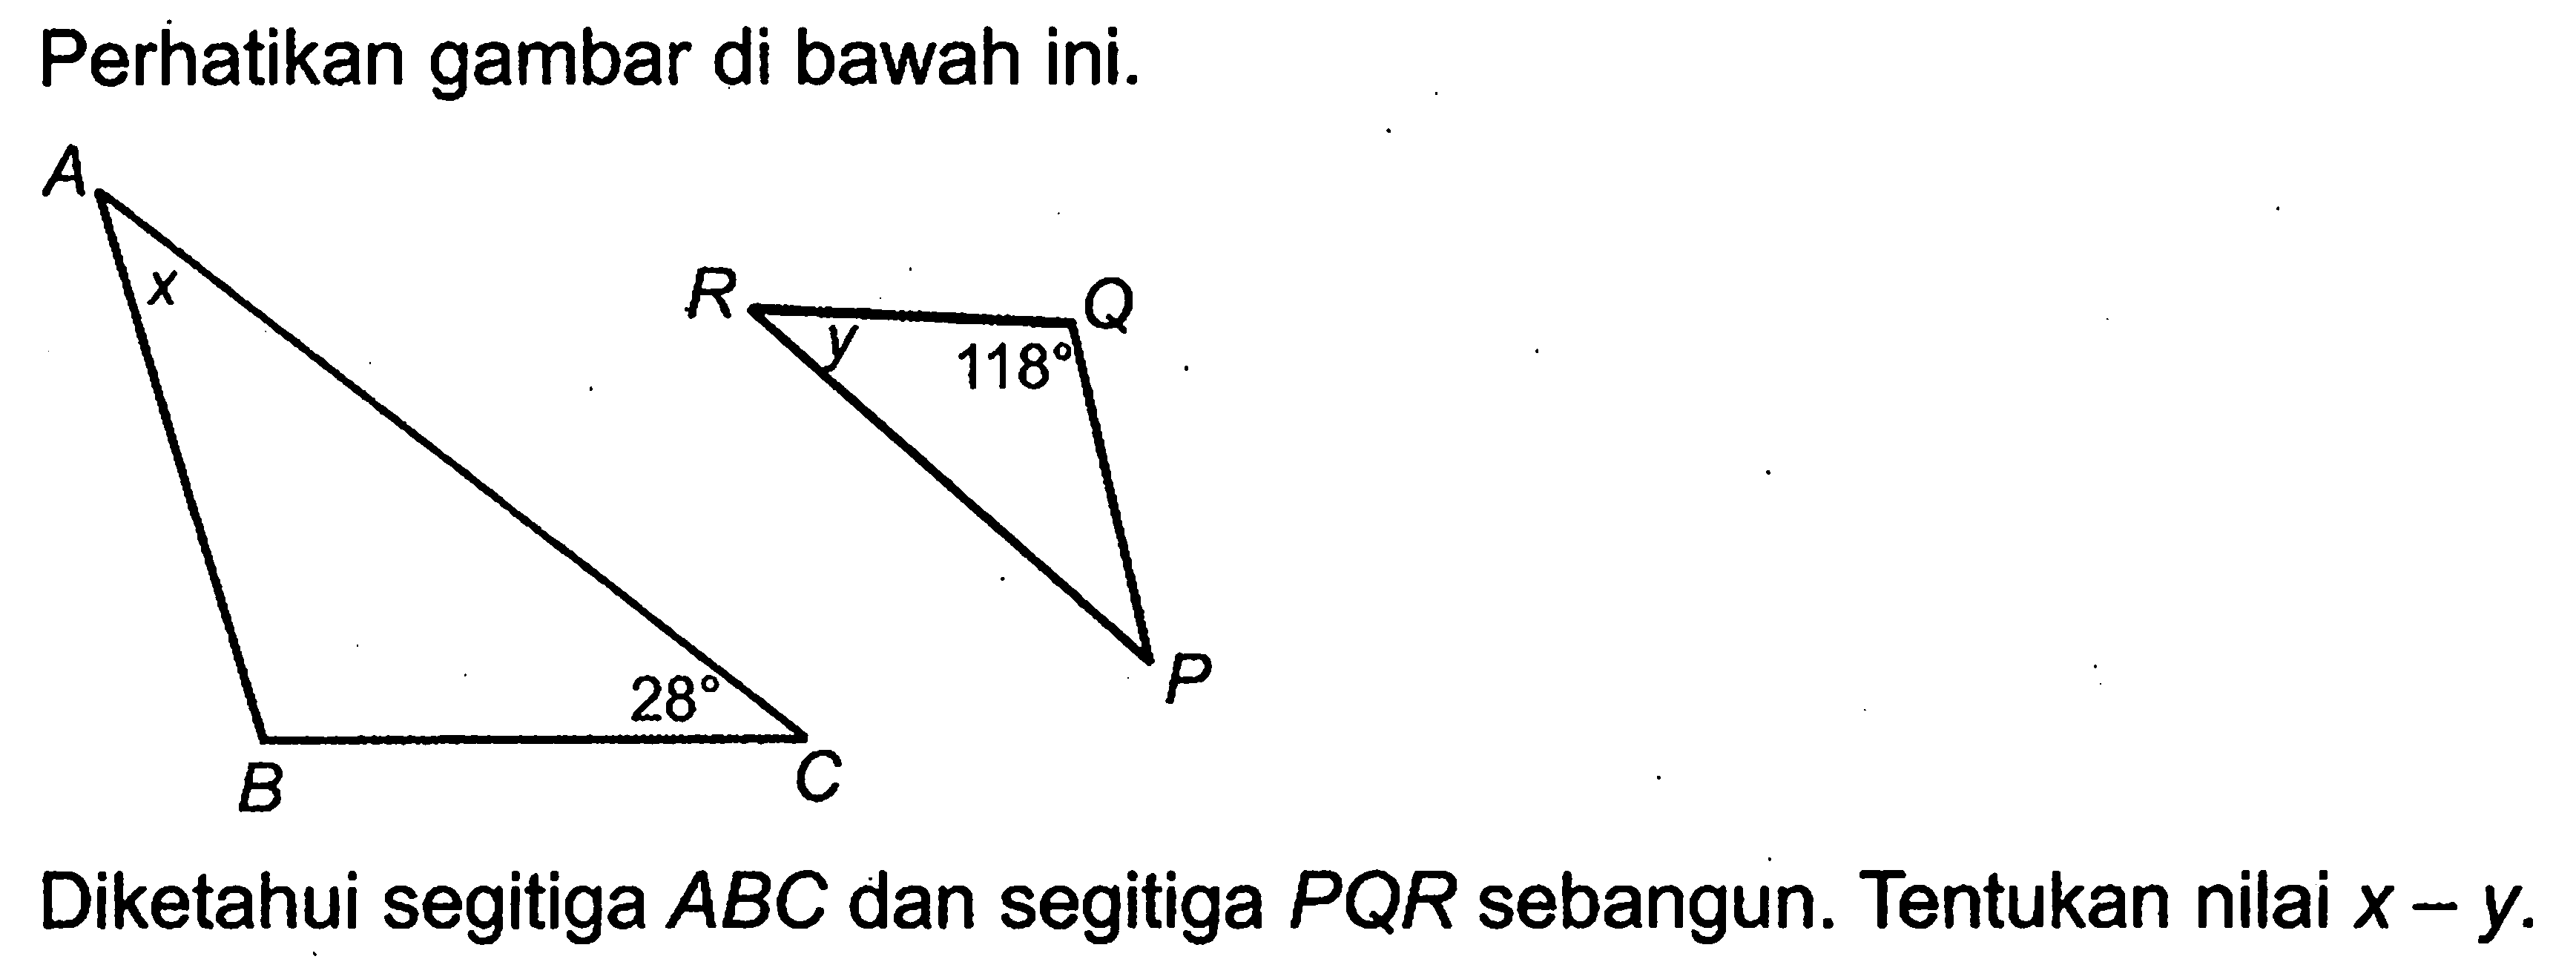 Perhatikan gambar di bawah ini. A C B X 28 , P Q R y 118 .Diketahui segitiga  ABC  dan segitiga  P Q R  sebangun. Tentukan nilai  x-y .